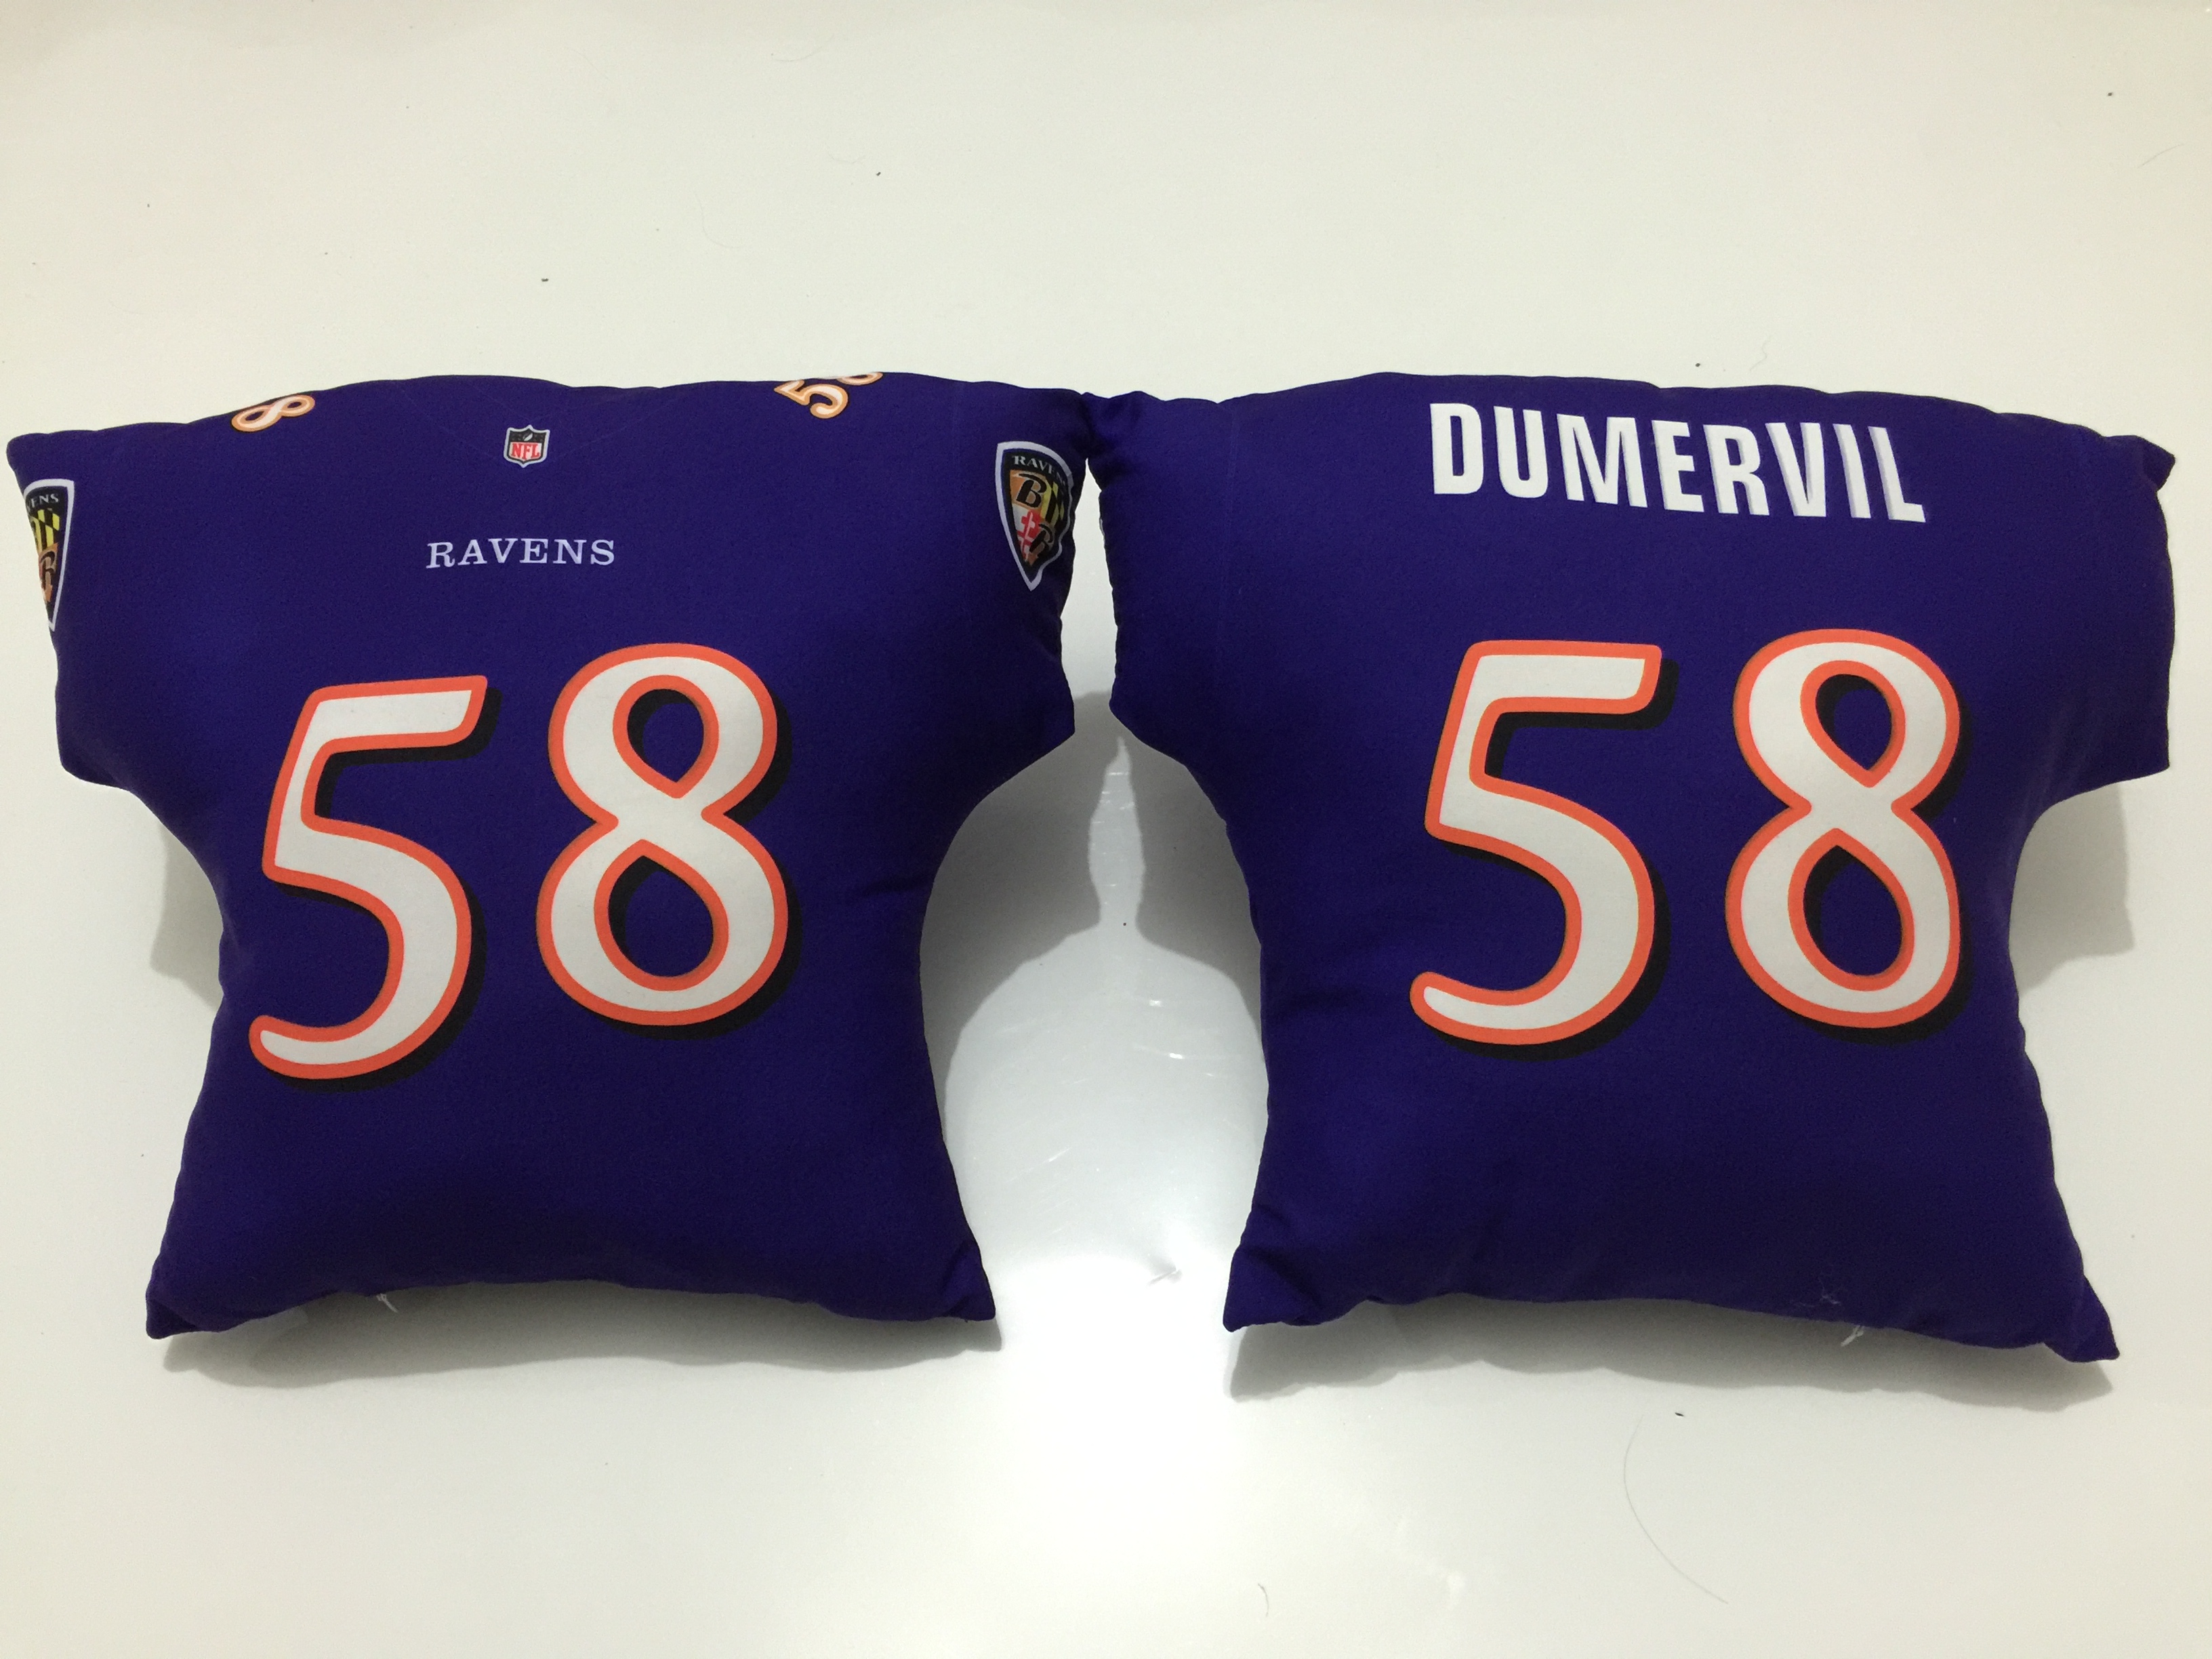 Baltimore Ravens 58 Elvis Dumervil Purple NFL Pillow